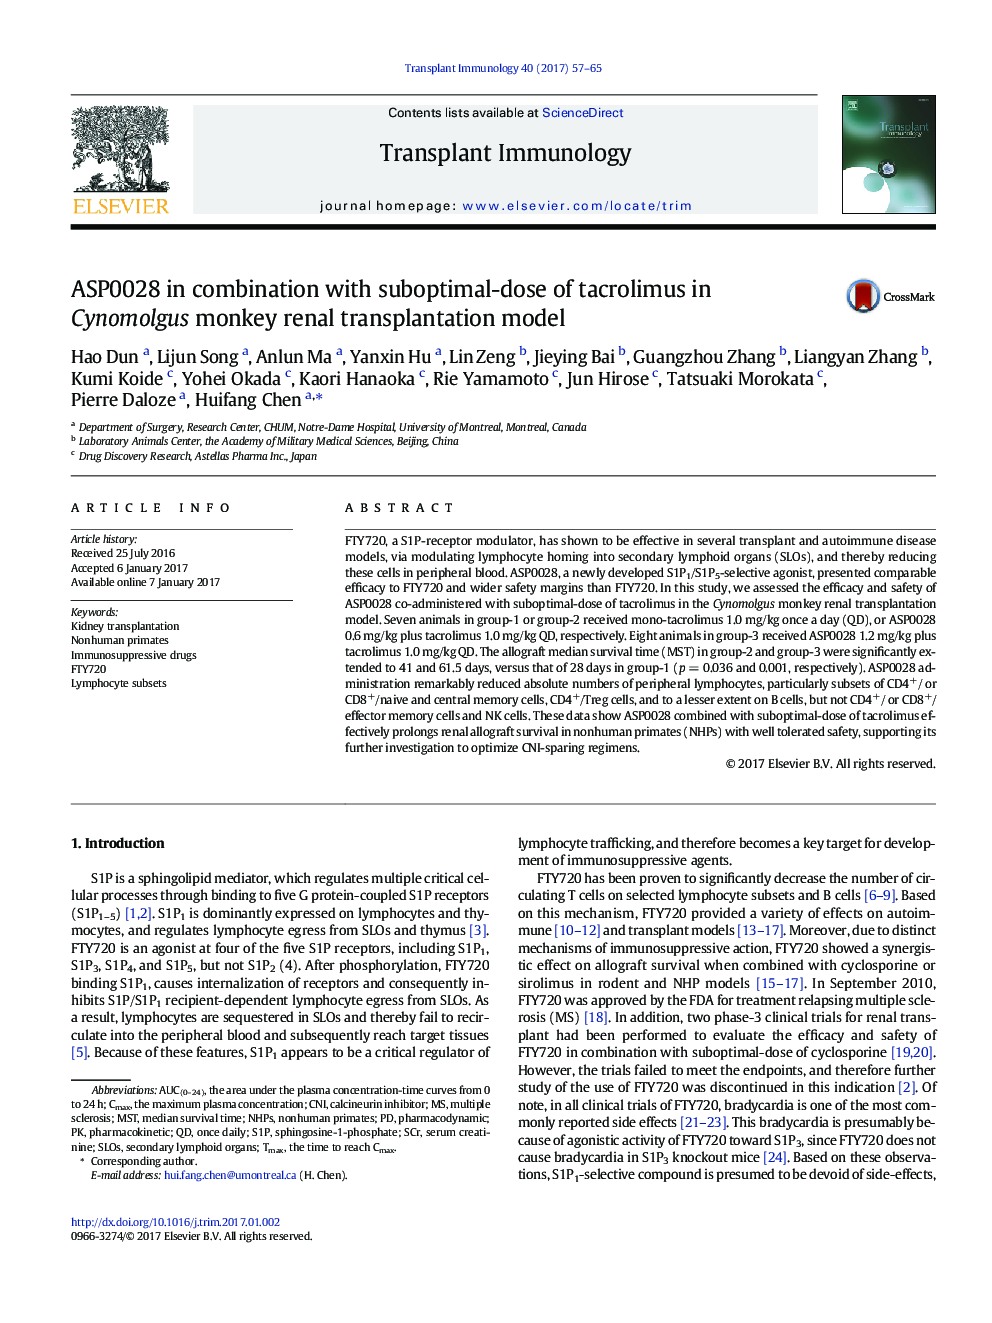 ASP0028 in combination with suboptimal-dose of tacrolimus in Cynomolgus monkey renal transplantation model